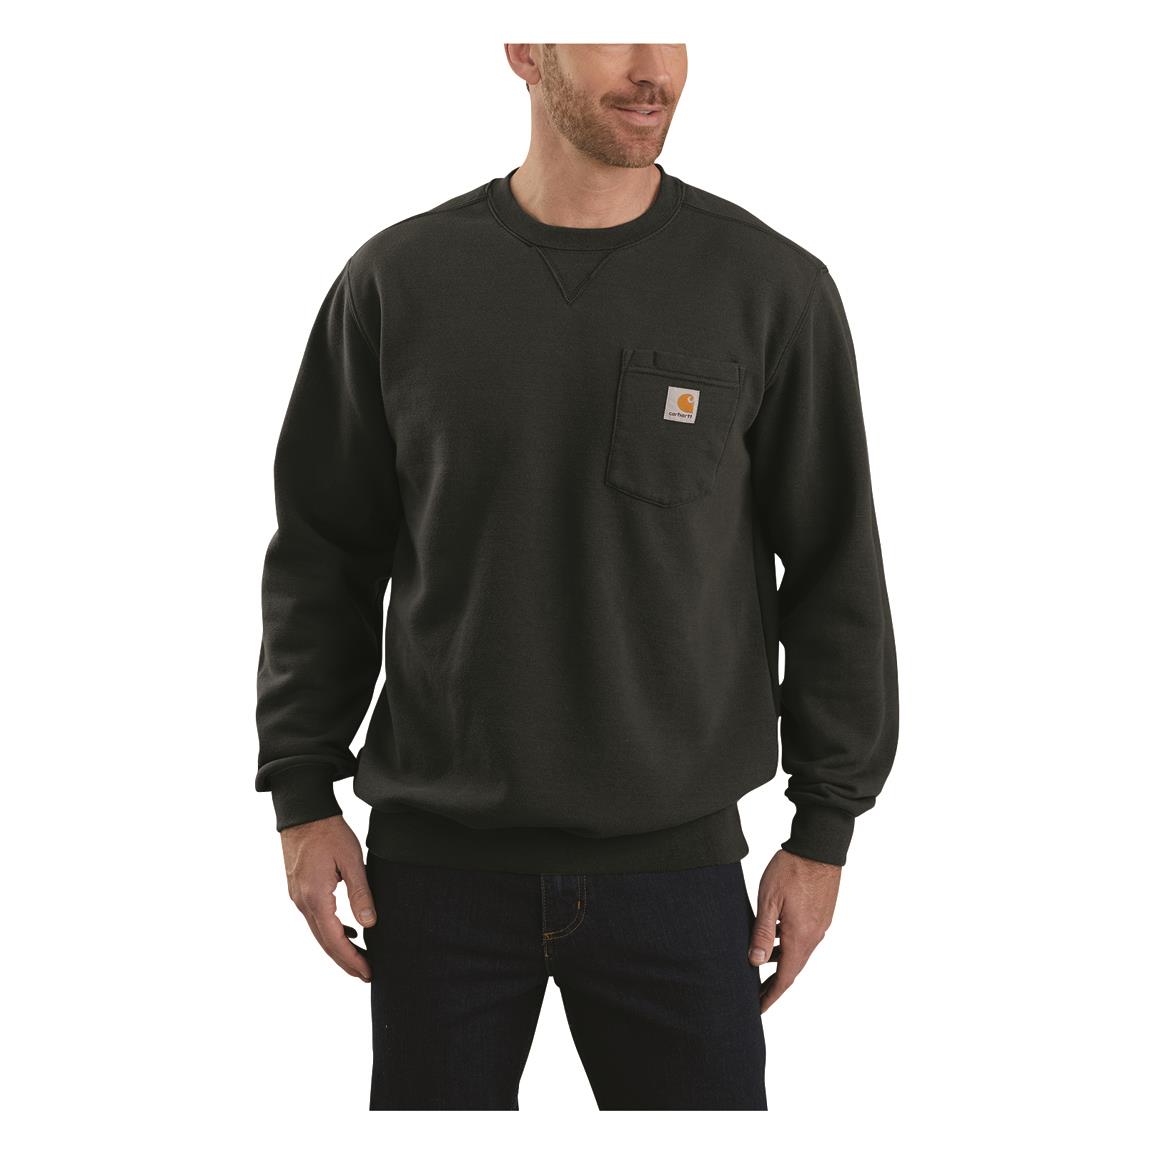 Carhartt Men's Crewneck Pocket Sweatshirt, Black